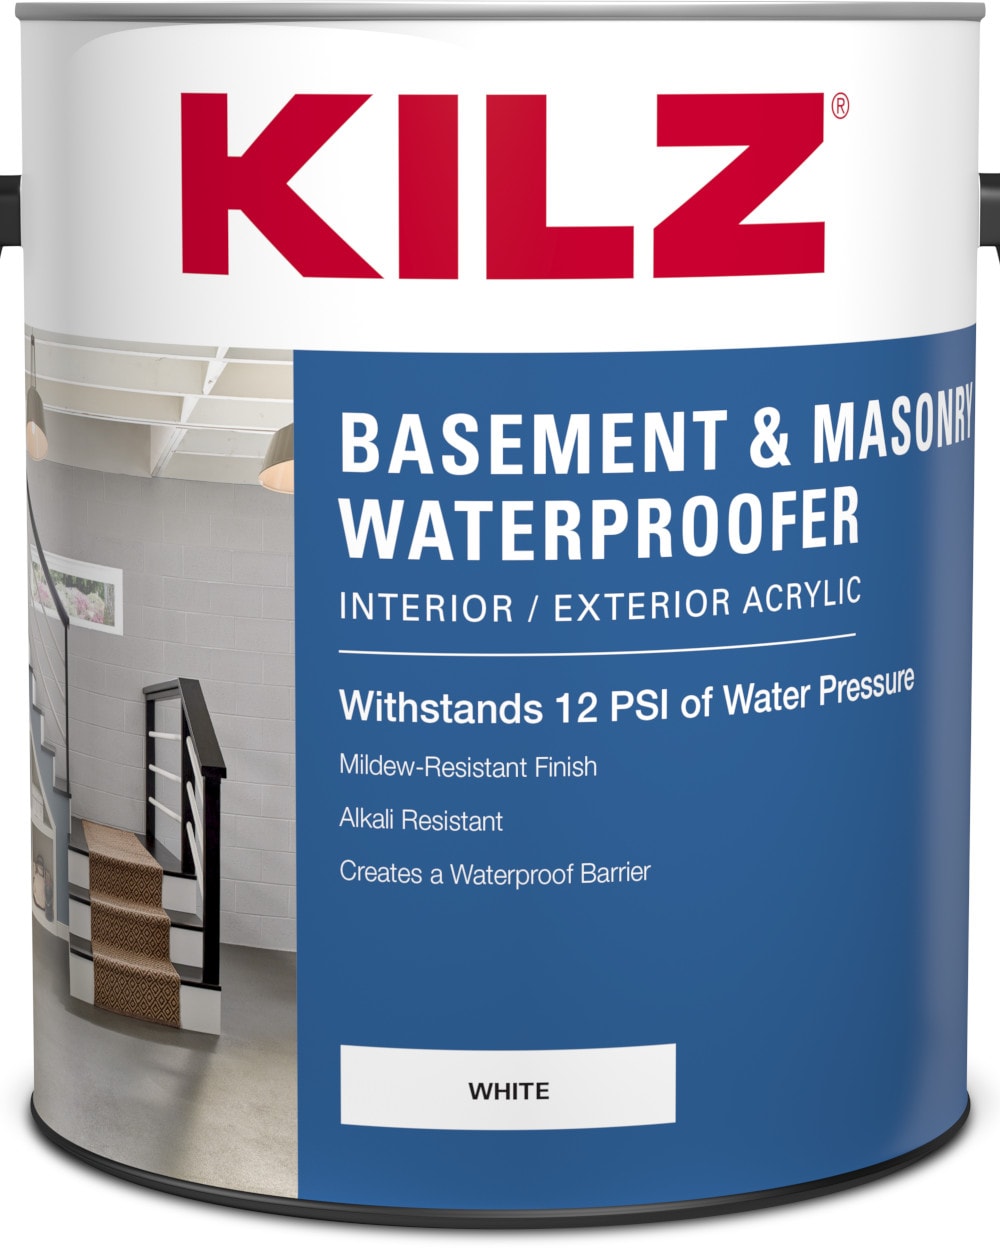 KILZ® Waterproofing Semi-Transparent Stain